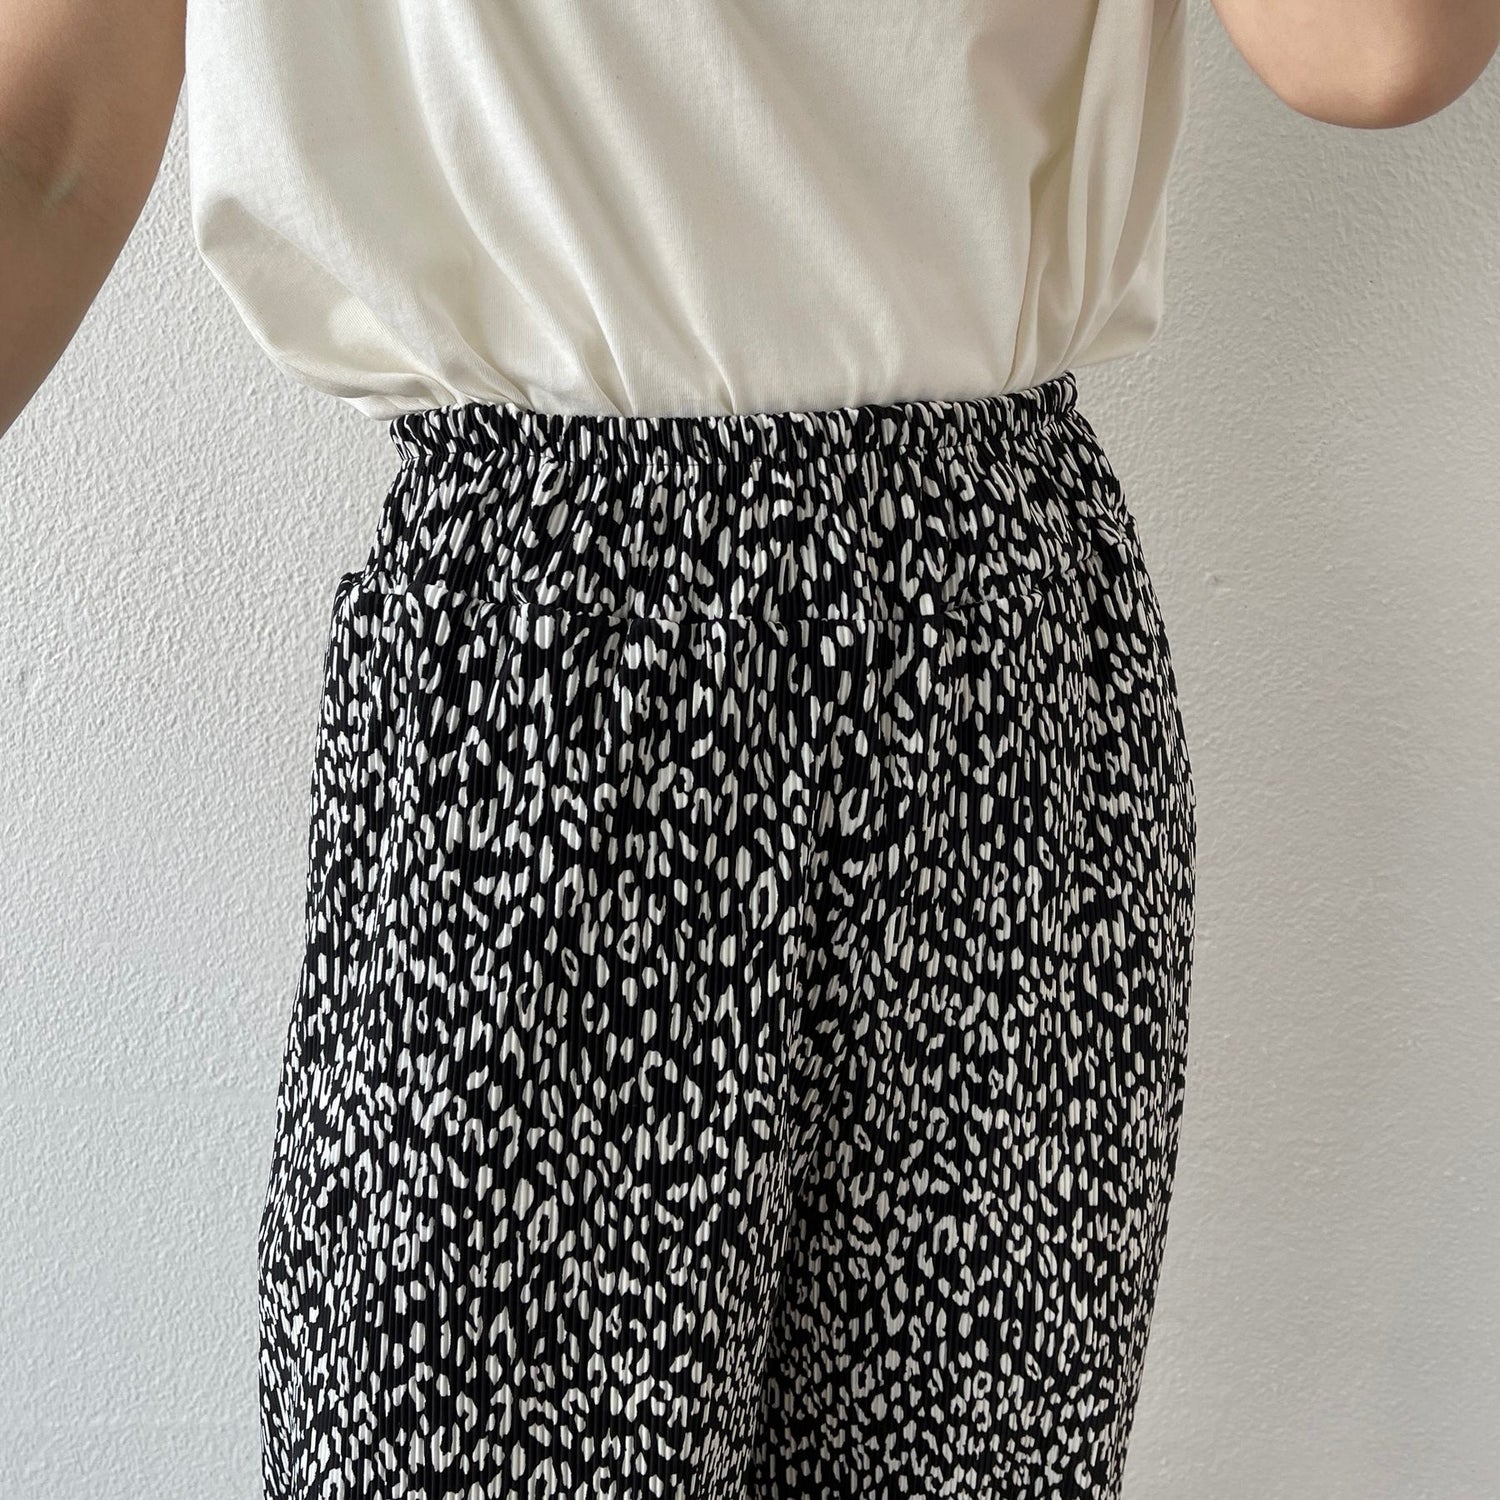 【SAMPLE】"osaka" leopard pleats pants / black